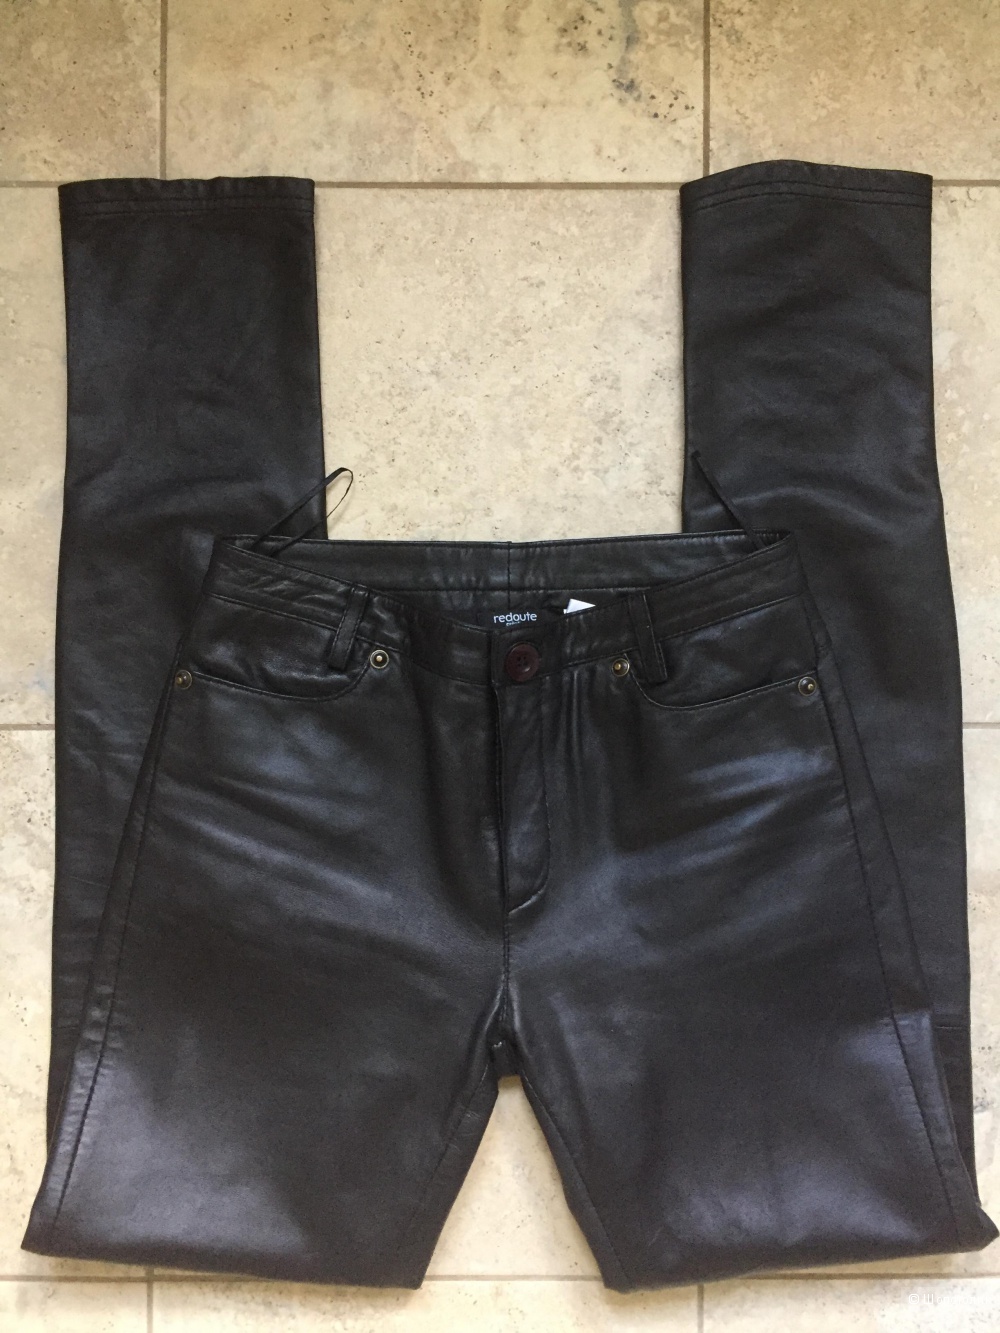 Кожаные брюки Redoute creation XS